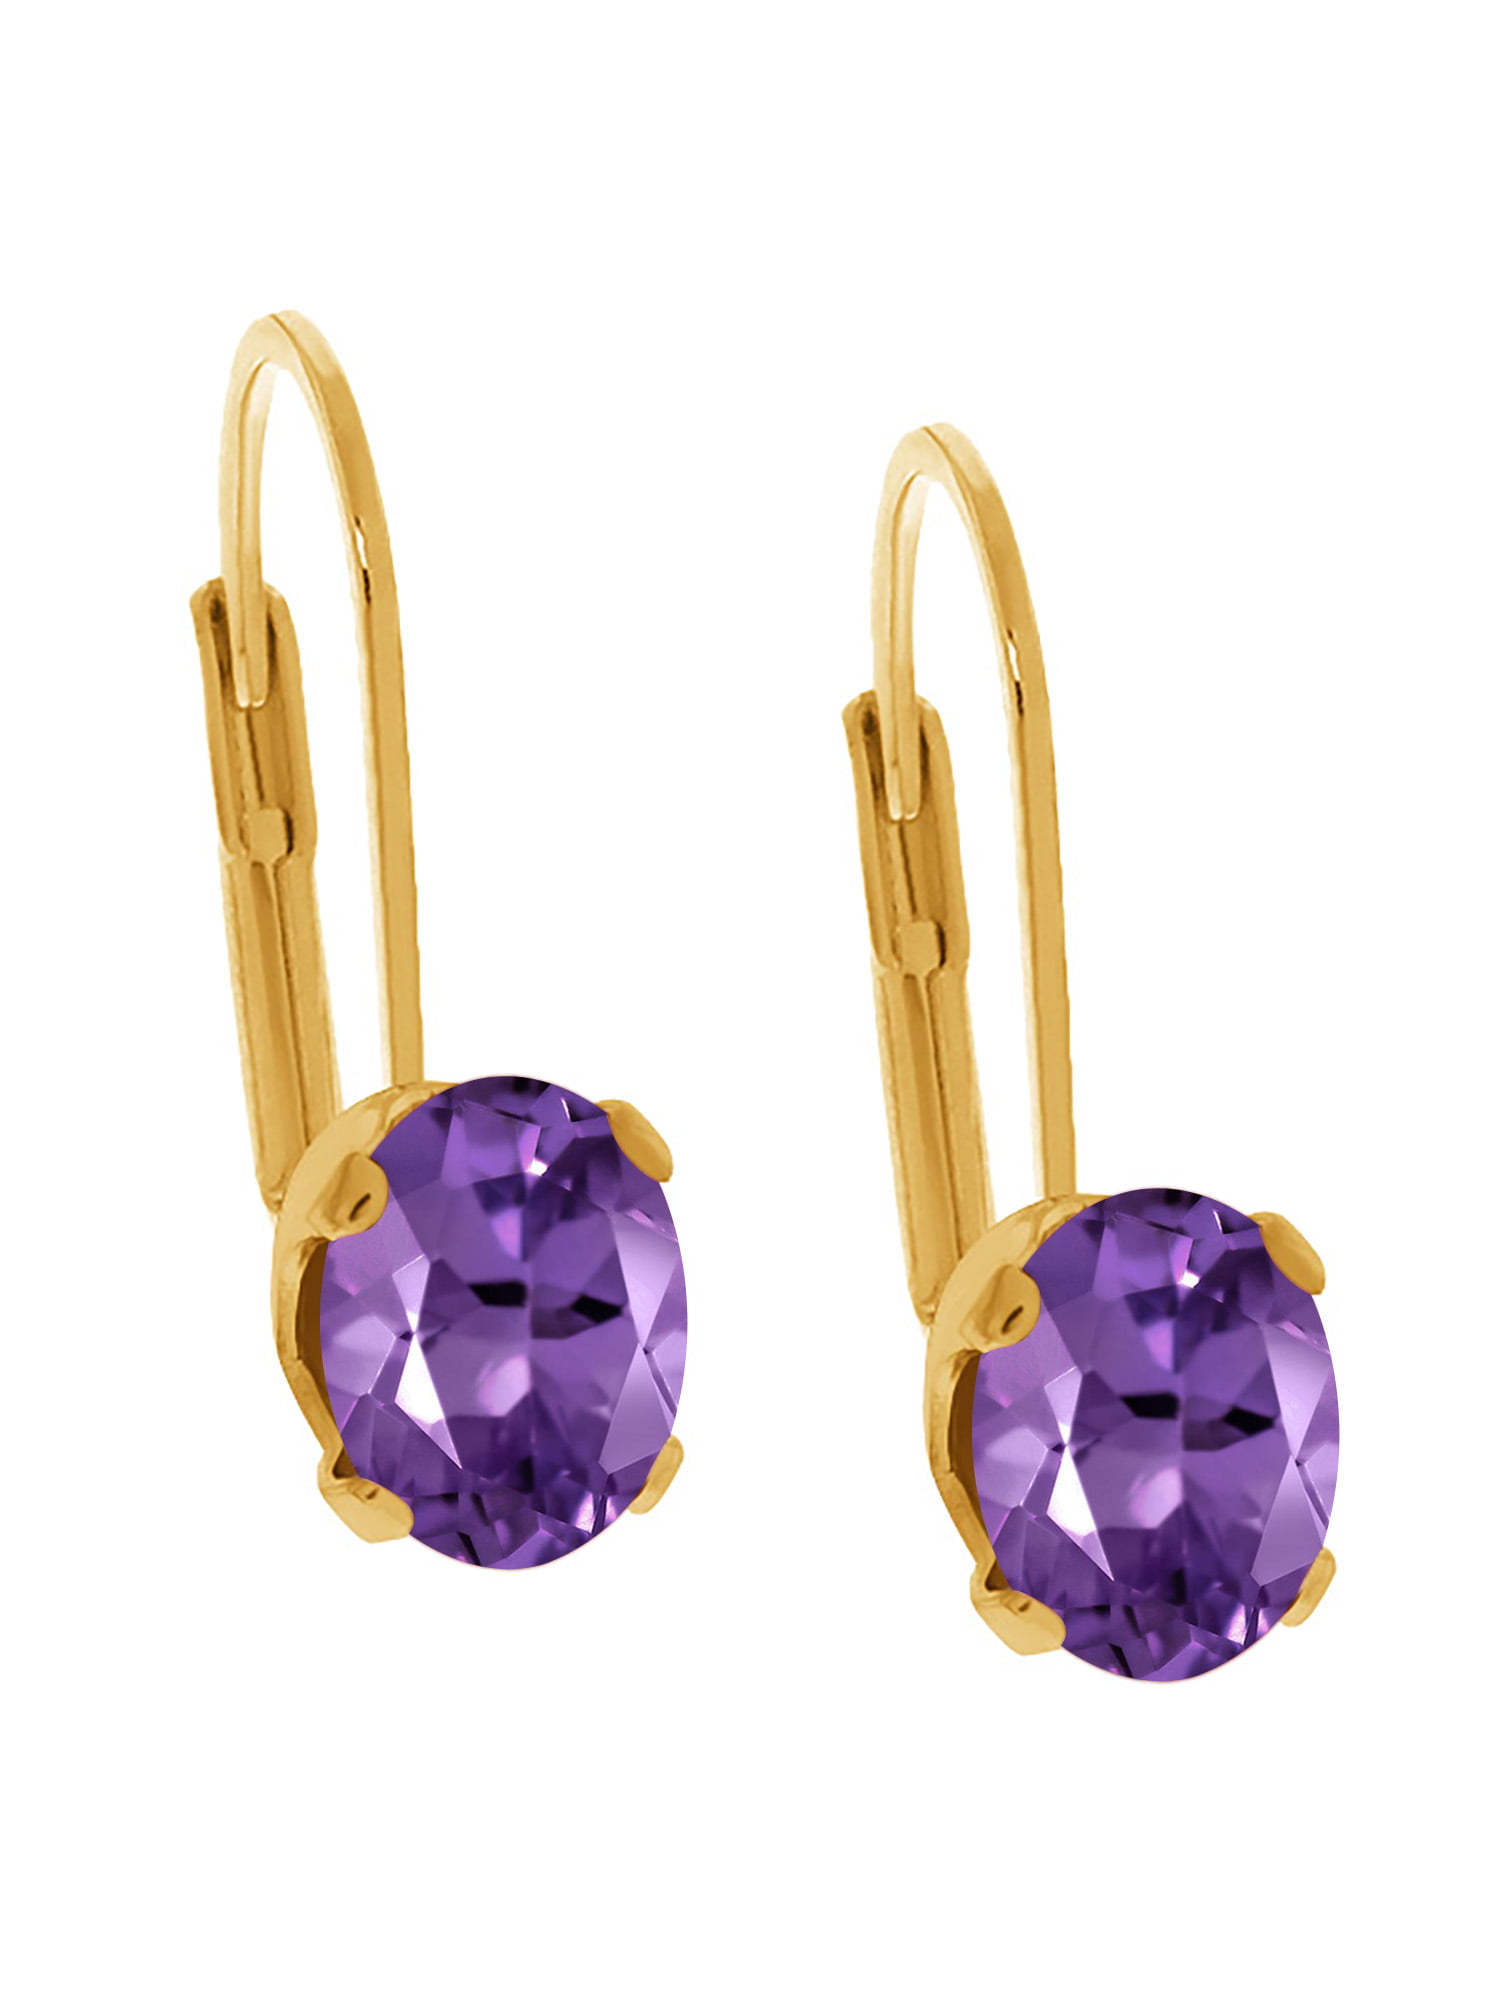 Gem Stone King 1.50 Ct Oval 7x5mm Purple Amethyst 18K Yellow Gold Plated Silver Stud Earrings 